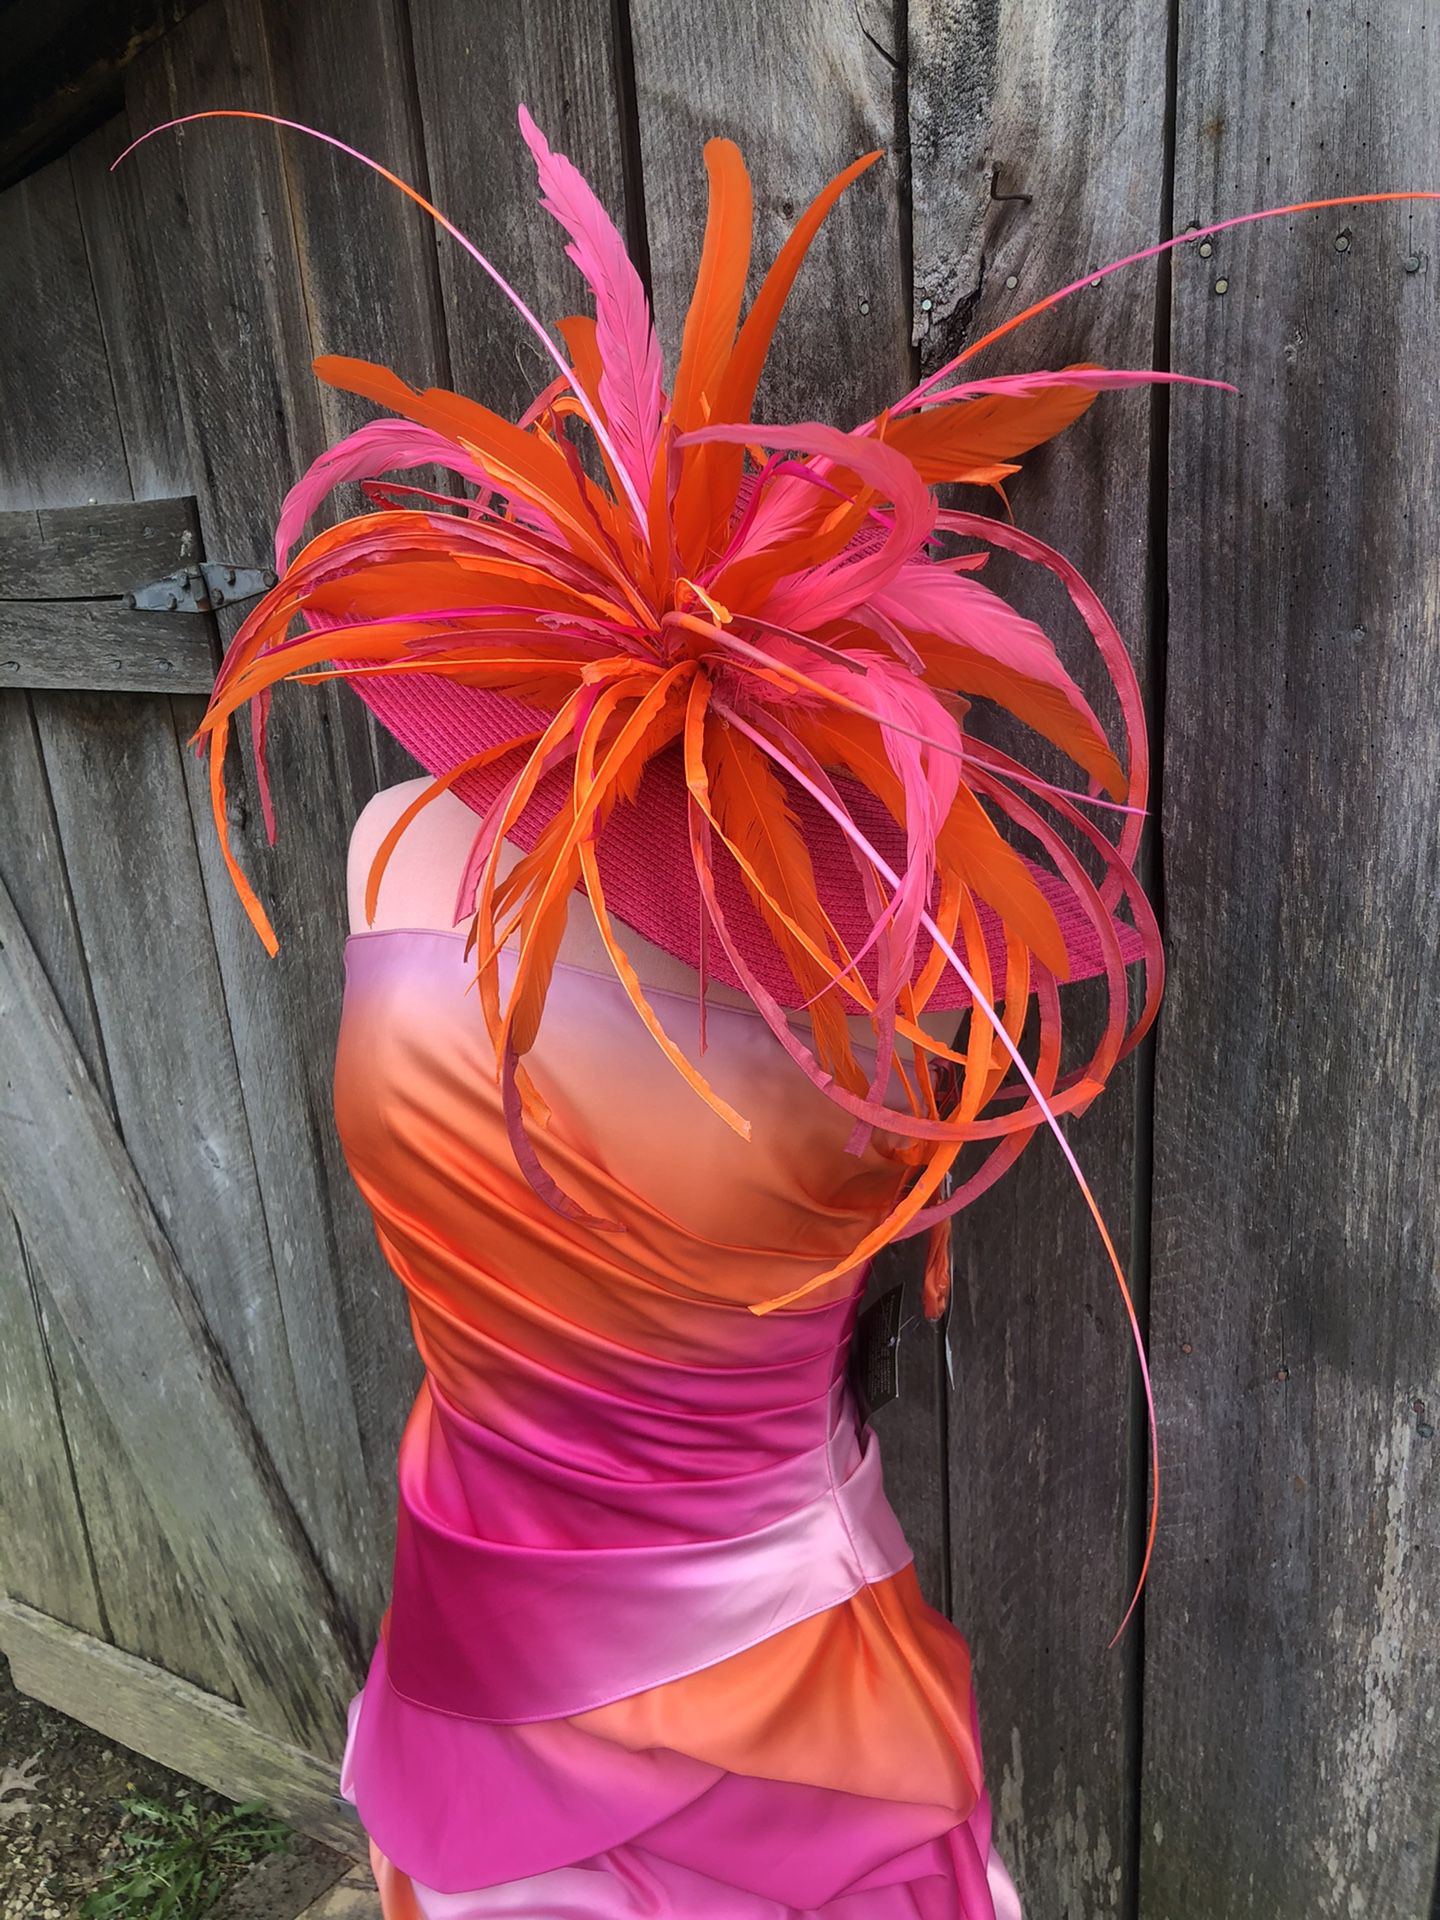 orange/pink dress Sz.5/6( more like 3/4)... or pink dress Sz.16-$100/set or $85/hat alone!